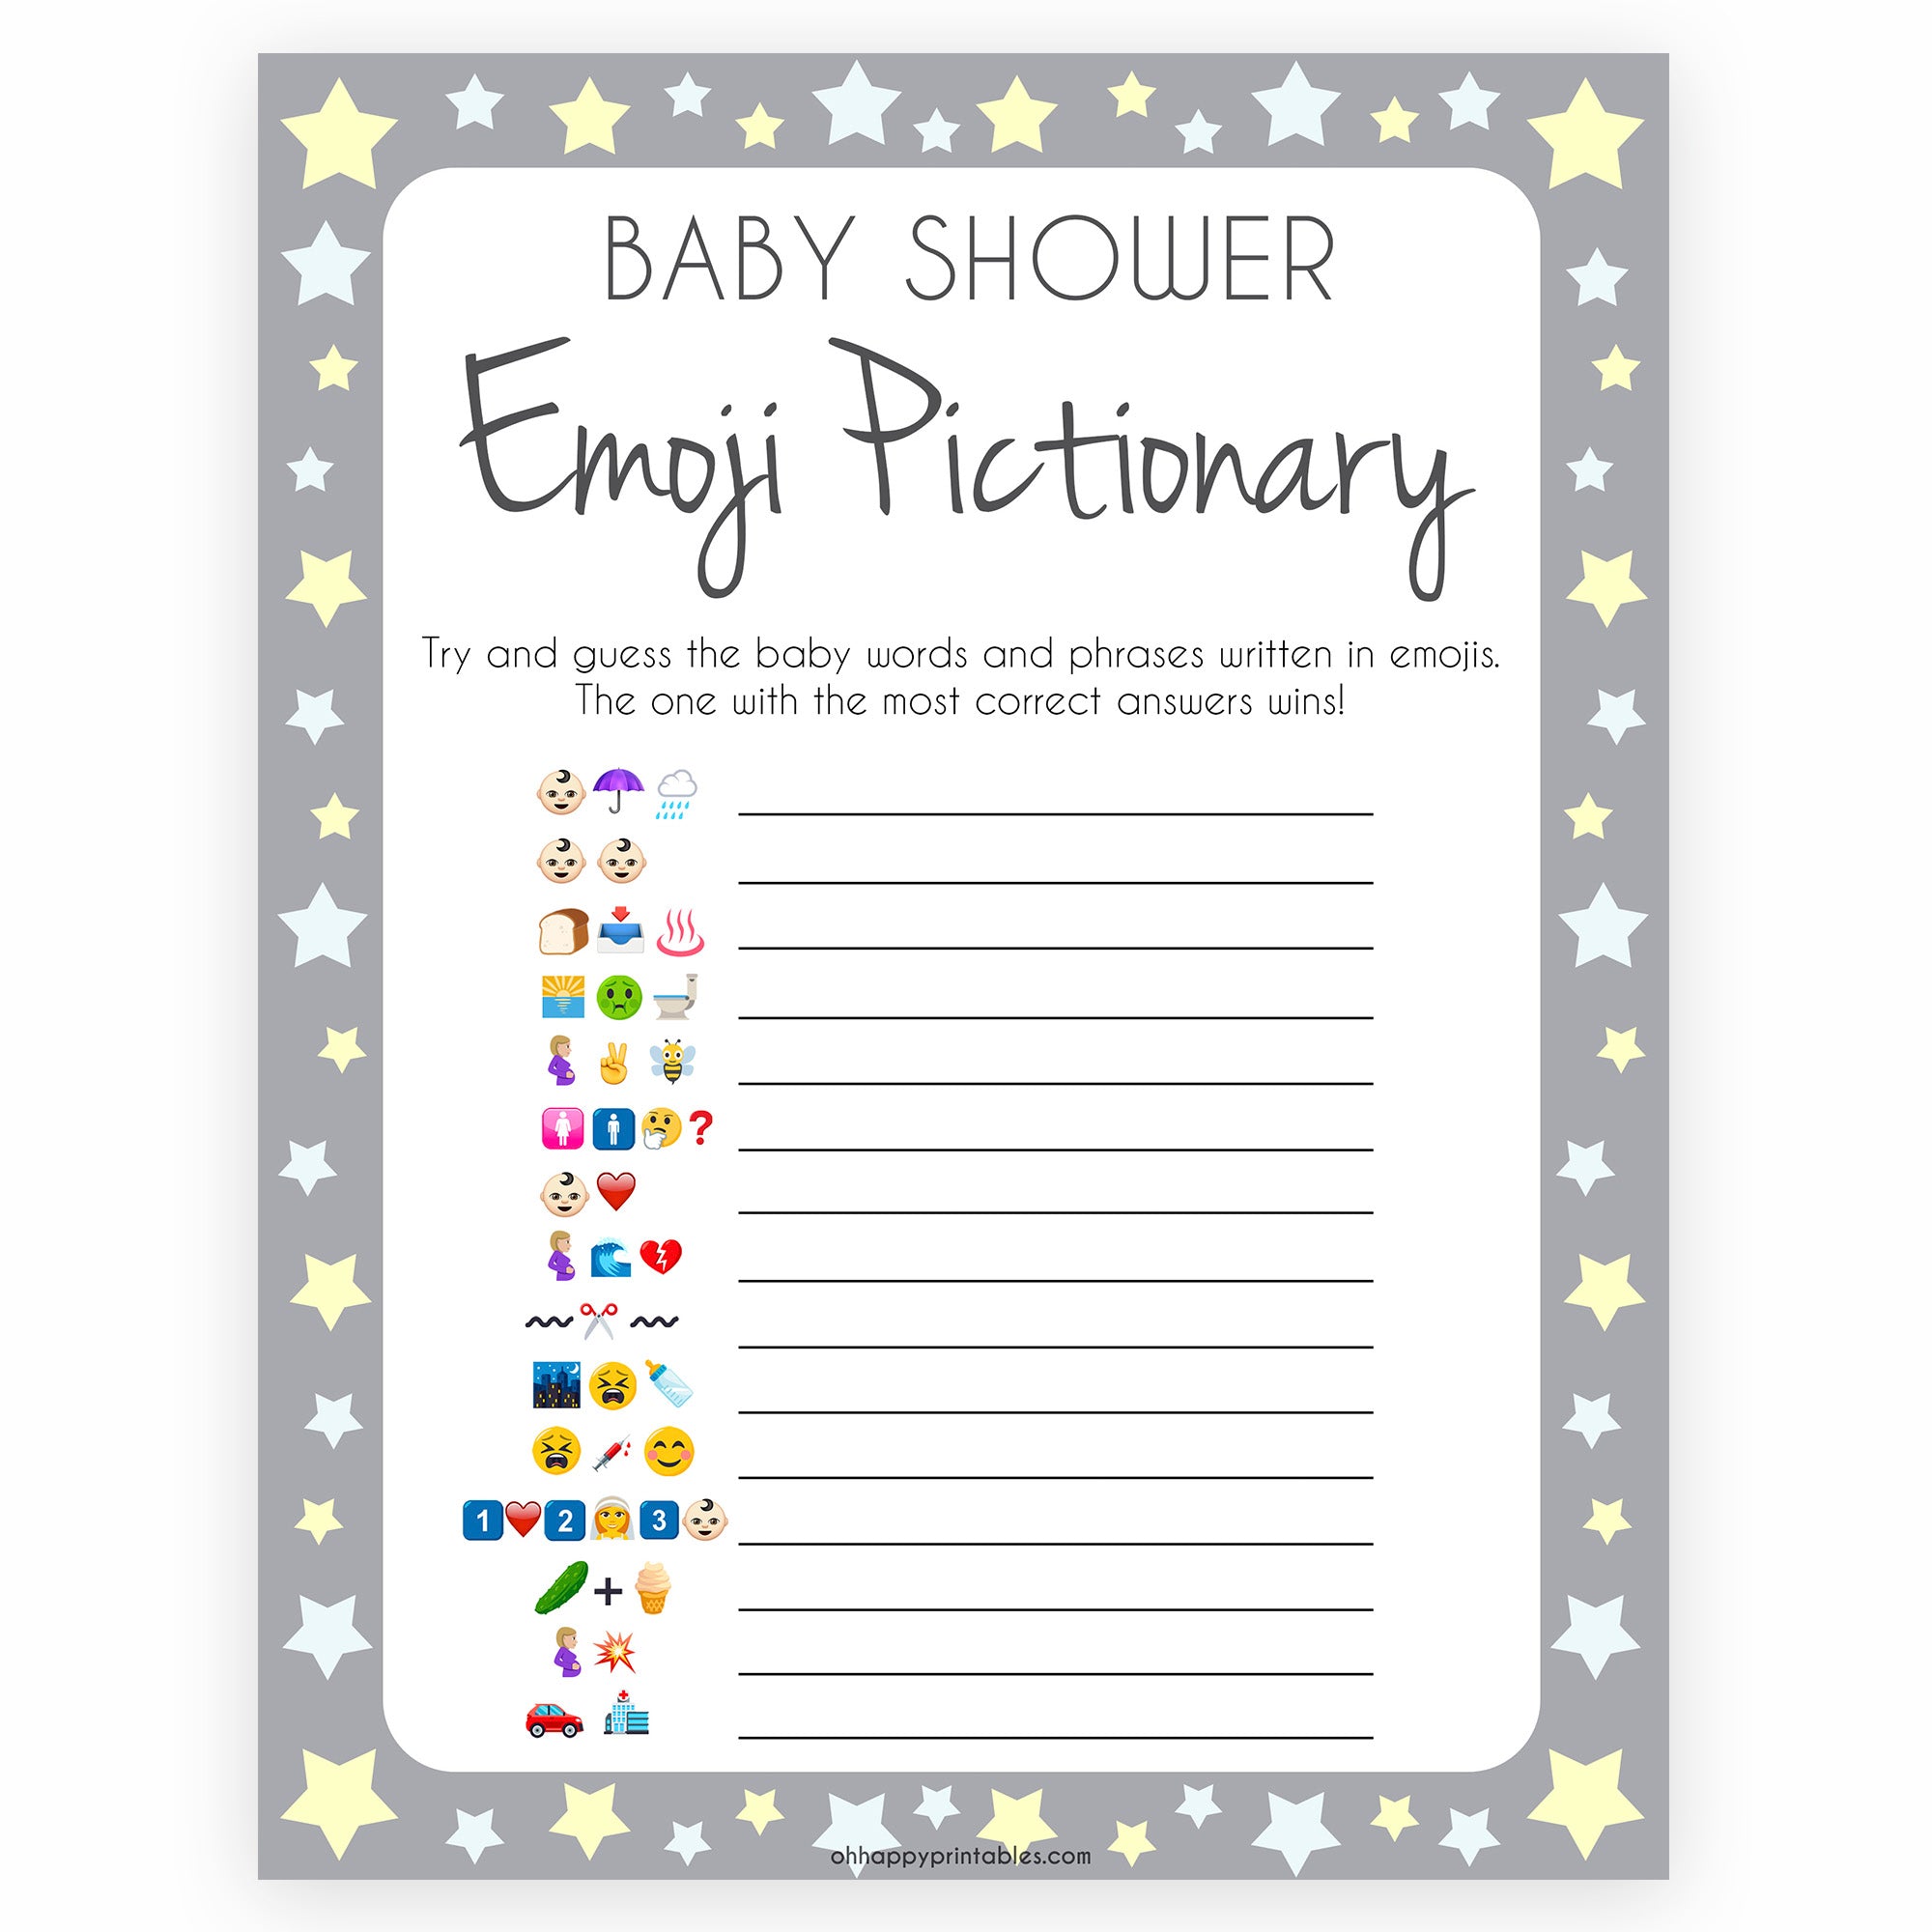 nautical-baby-shower-game-template-emoji-pictionary-emoji-etsy-images